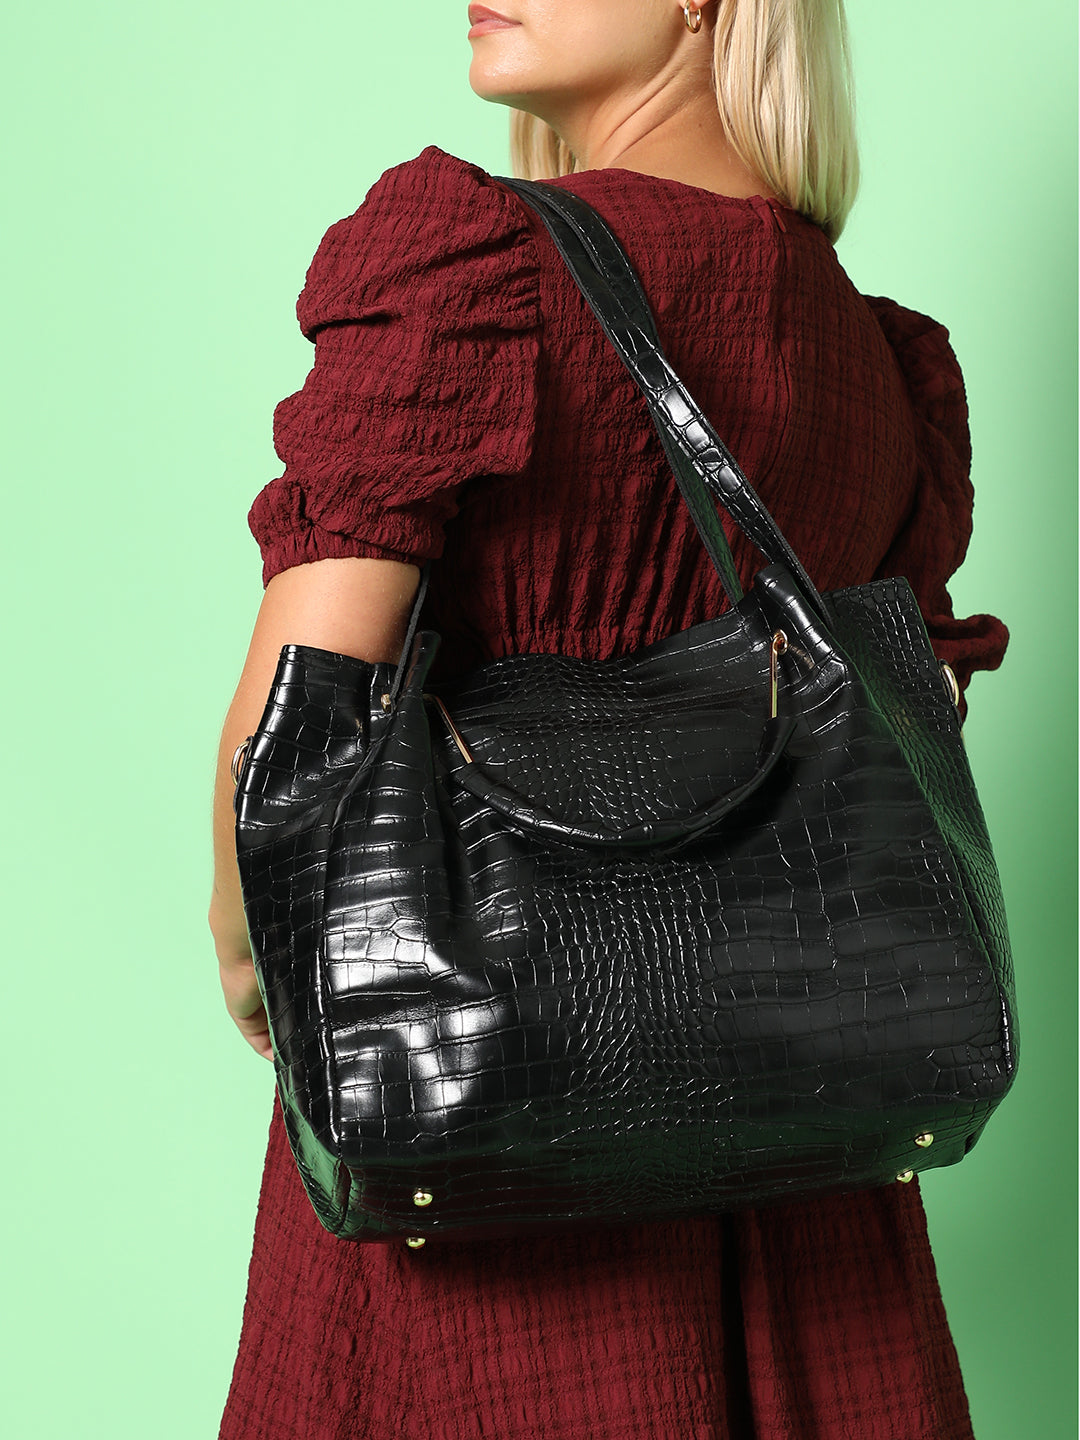 Mabel Black Handbag Set